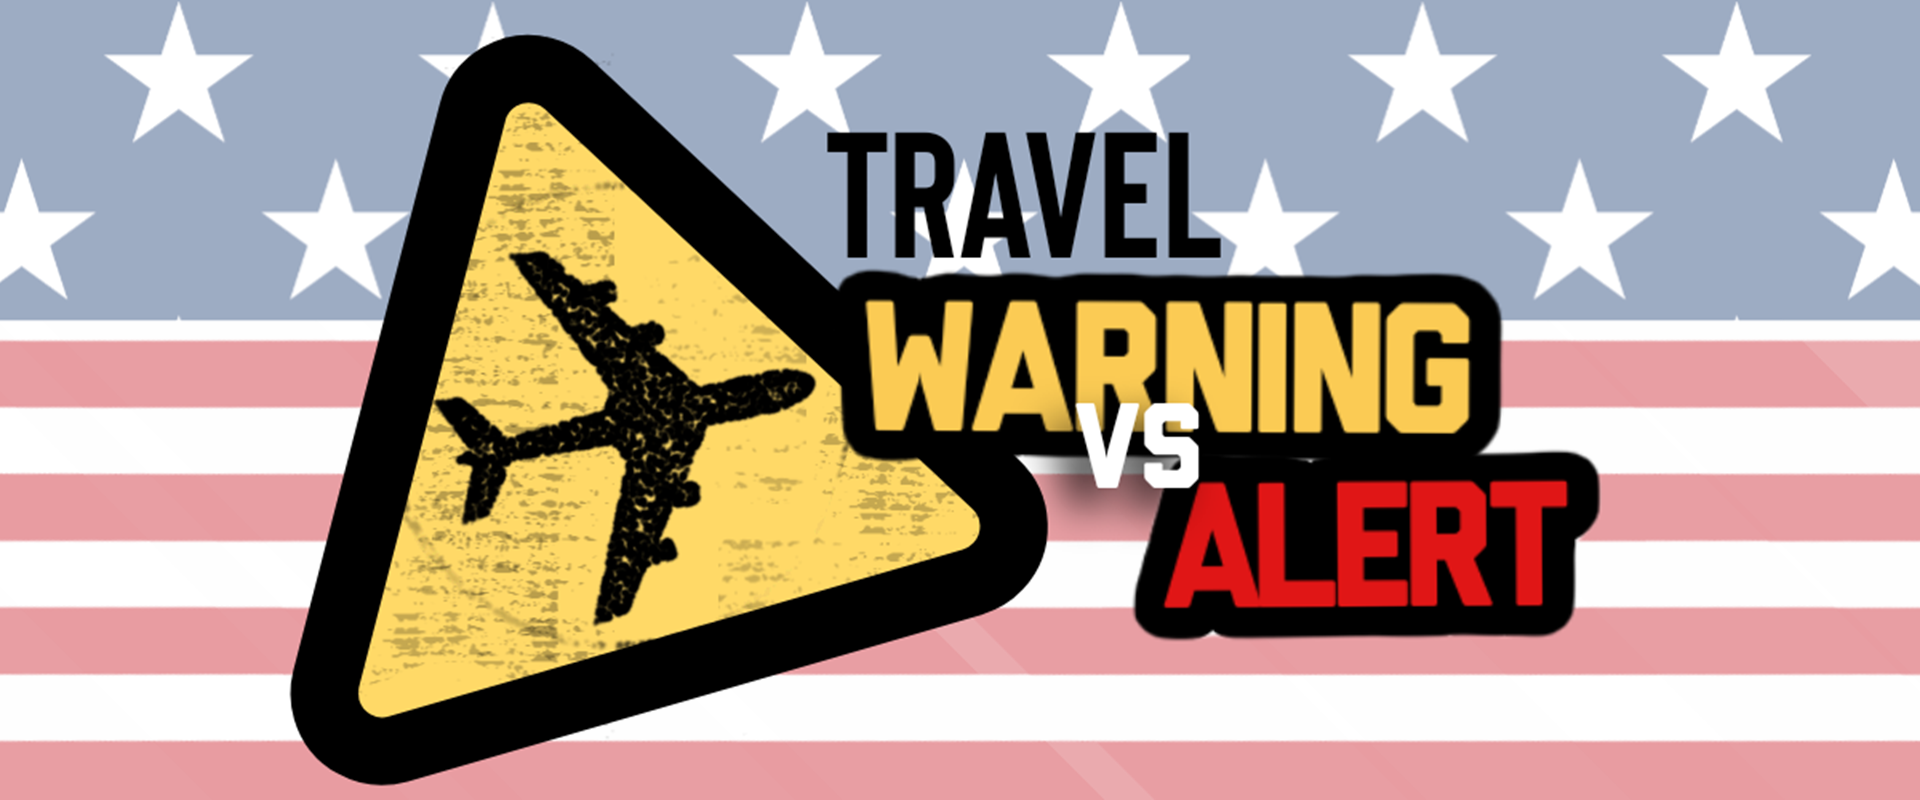 Travel Alerts vs. Travel Warnings